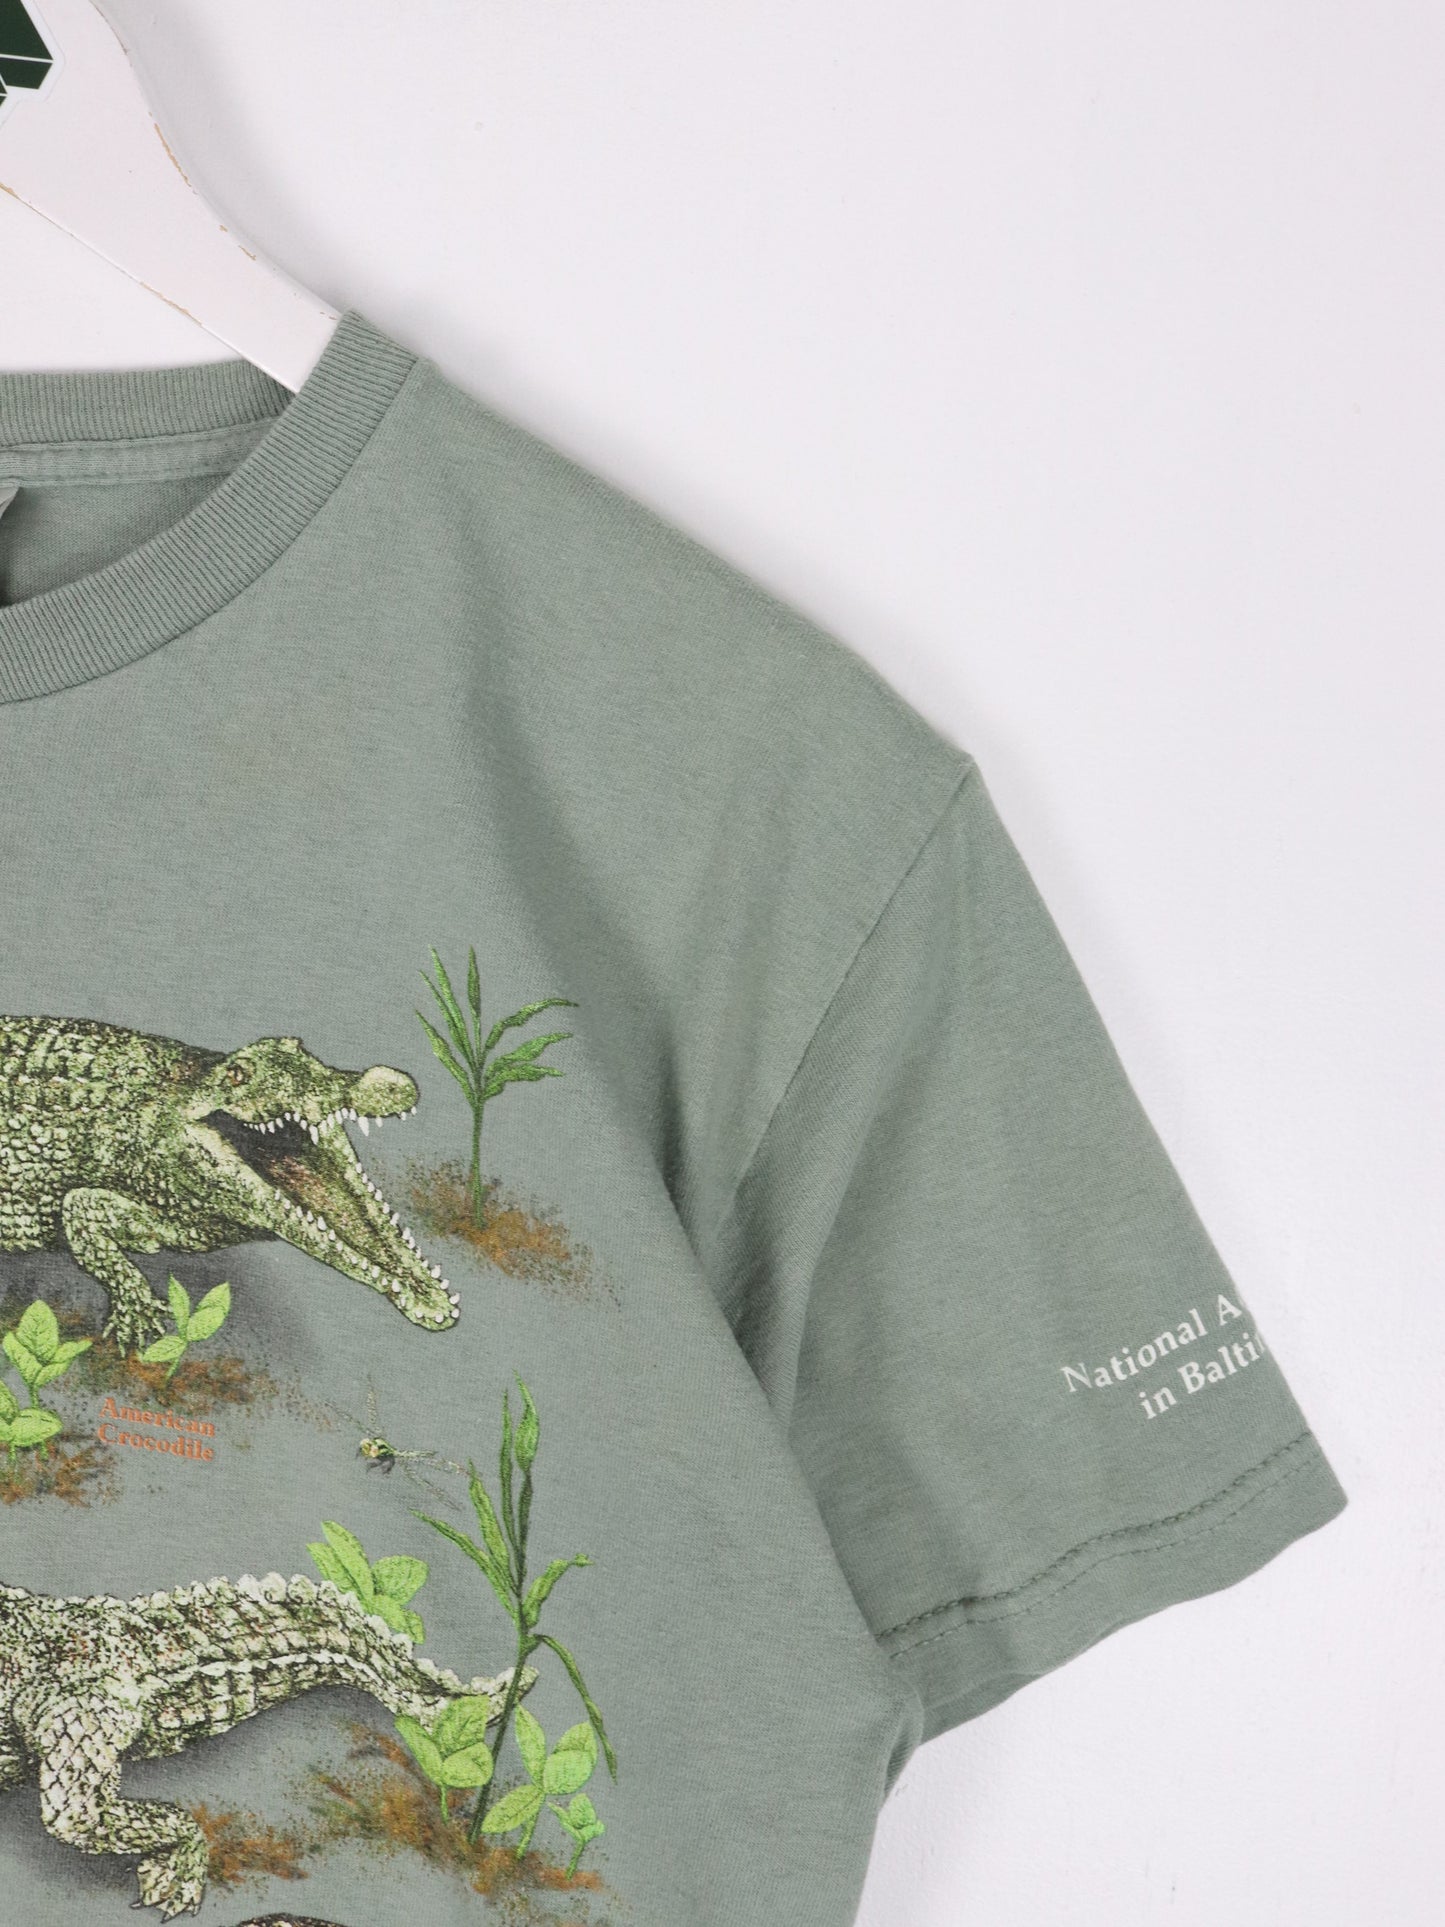 Crocodile T Shirt Mens Medium Green Baltimore Aquarium